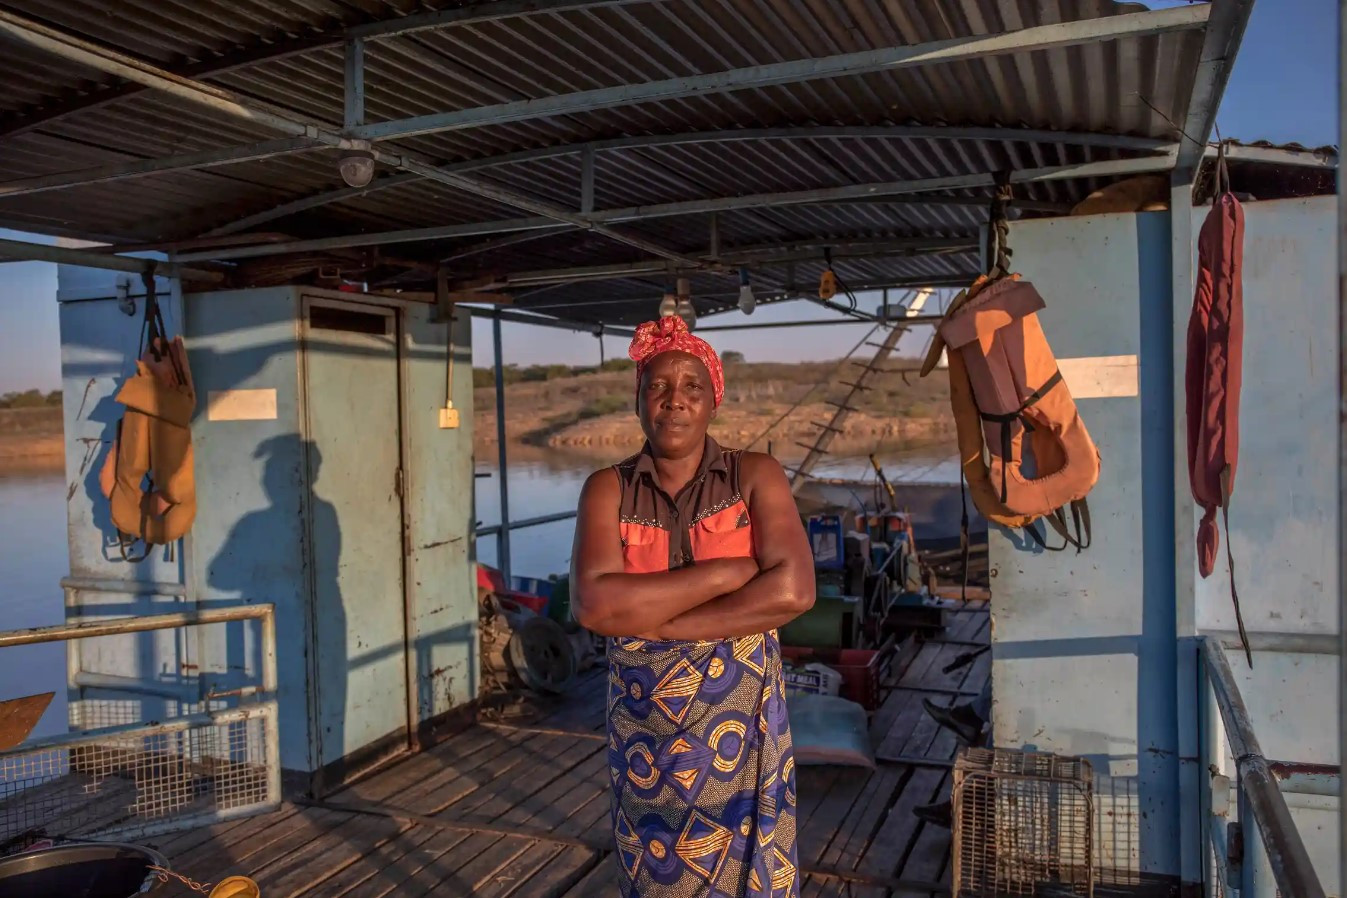 Munkuli trên thuyền của Hợp tác xã Bbindauko Banakazi Kapenta. Ảnh: The Guardian.